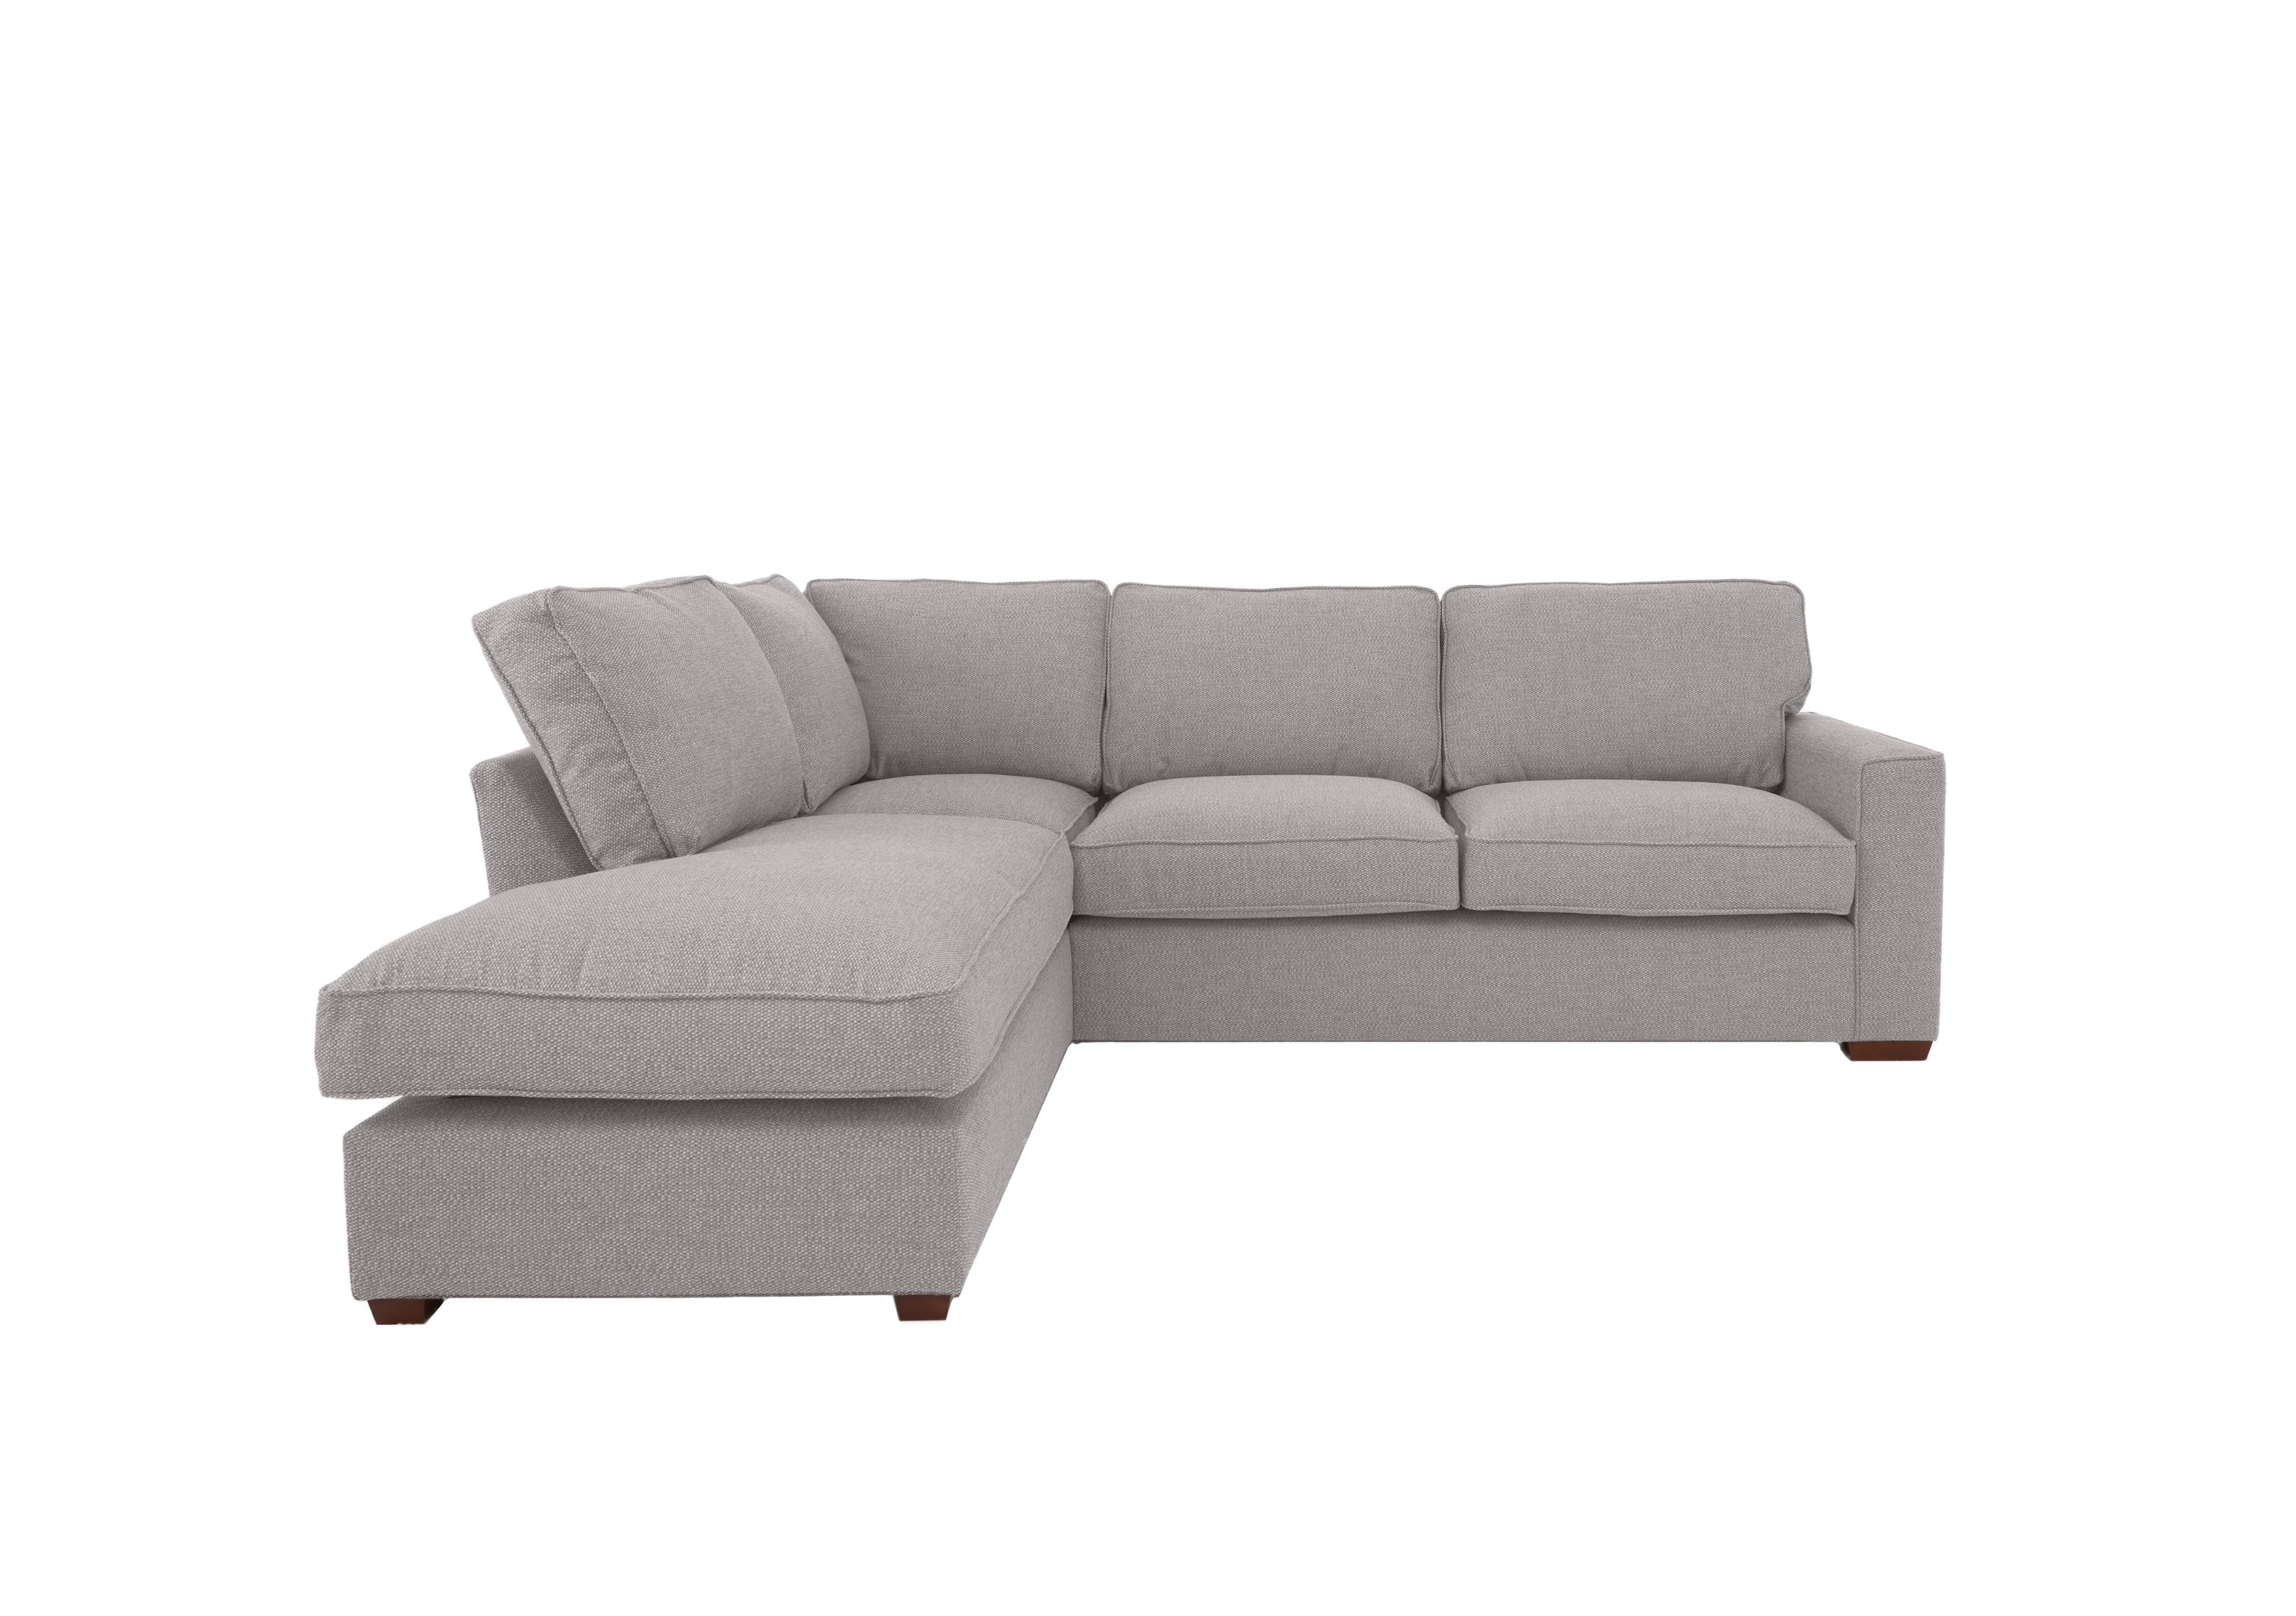 Cory Fabric Corner Chaise Classic Back Sofa Bed in Dallas Silver on Furniture Village